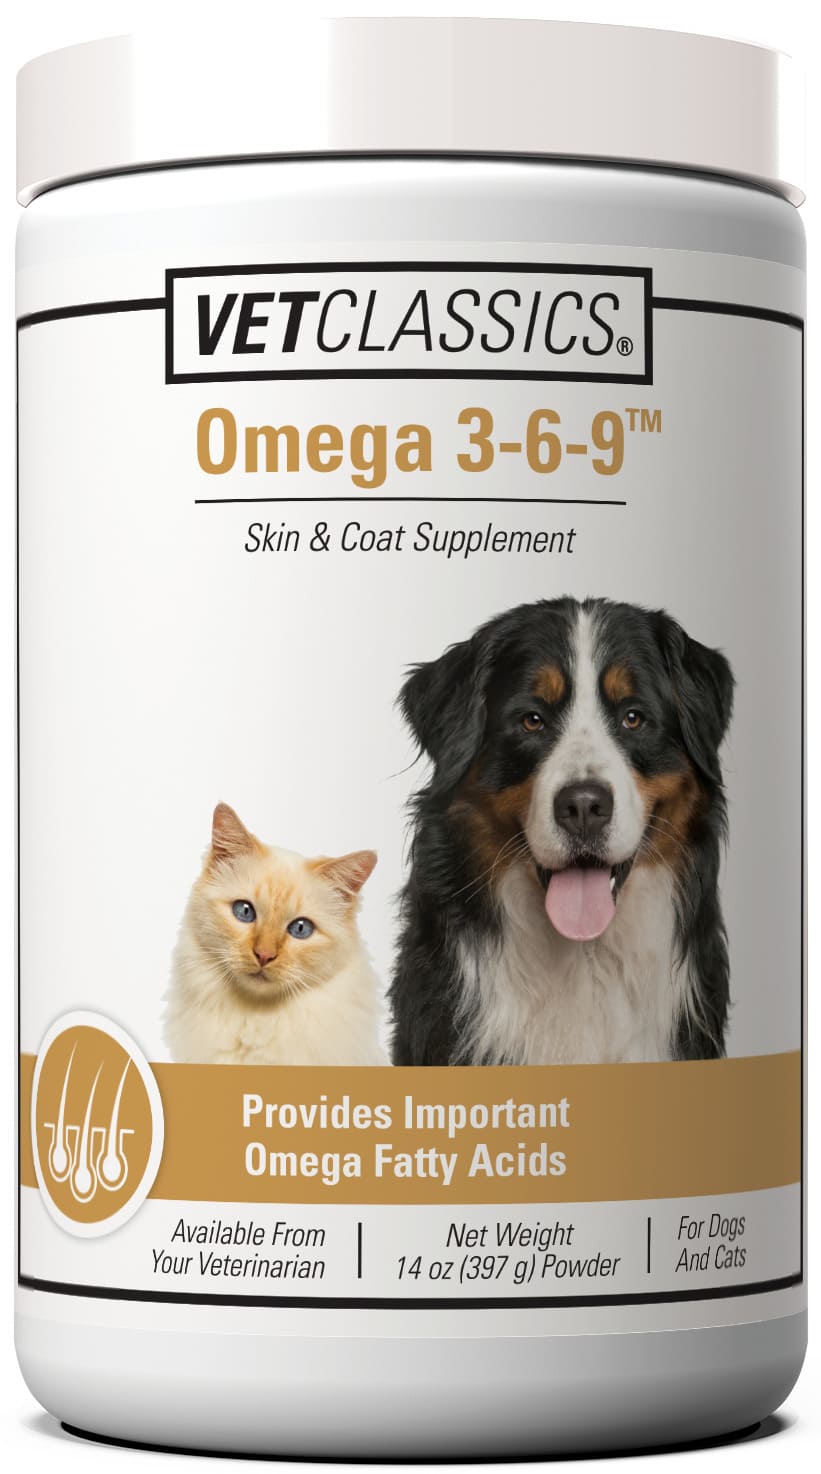 VetClassics Omega 3-6-9 Powder